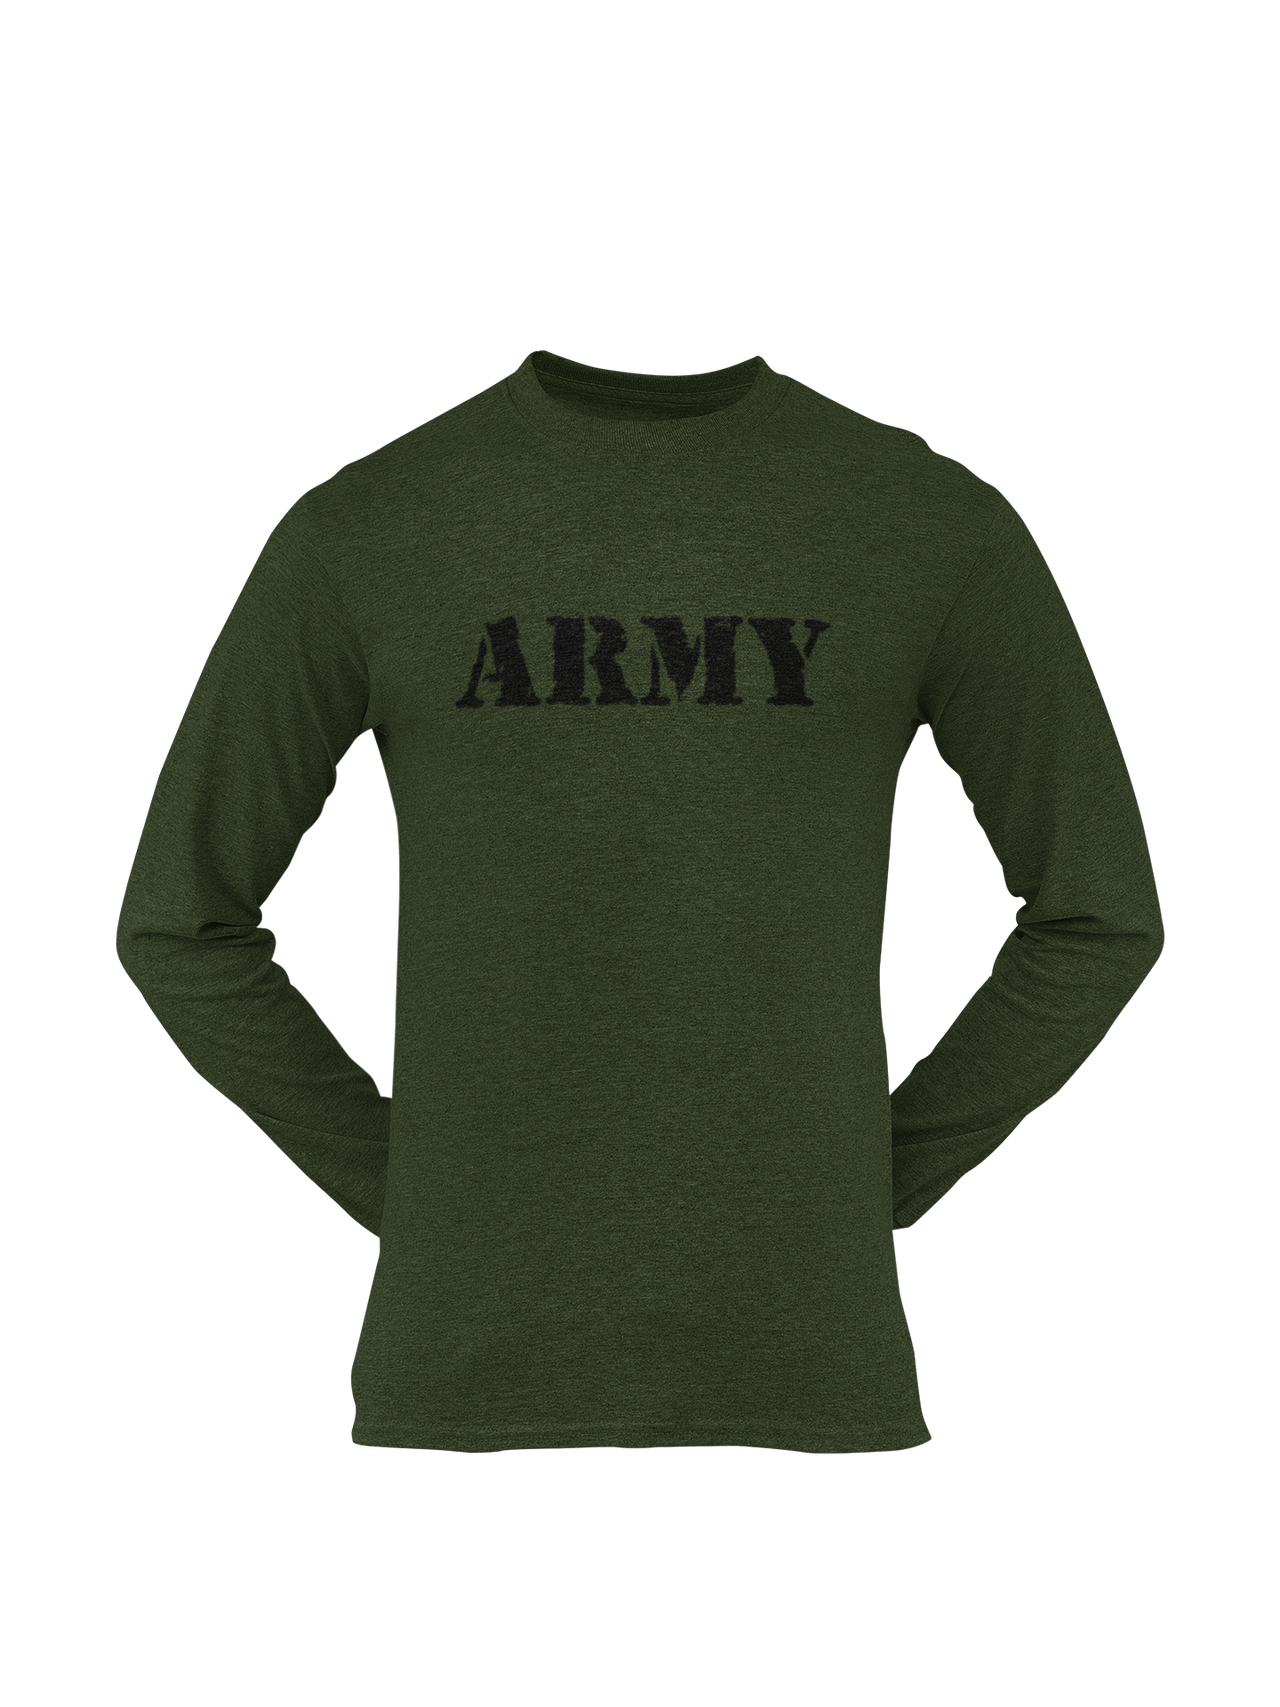 Army T-shirt - Army (Men)